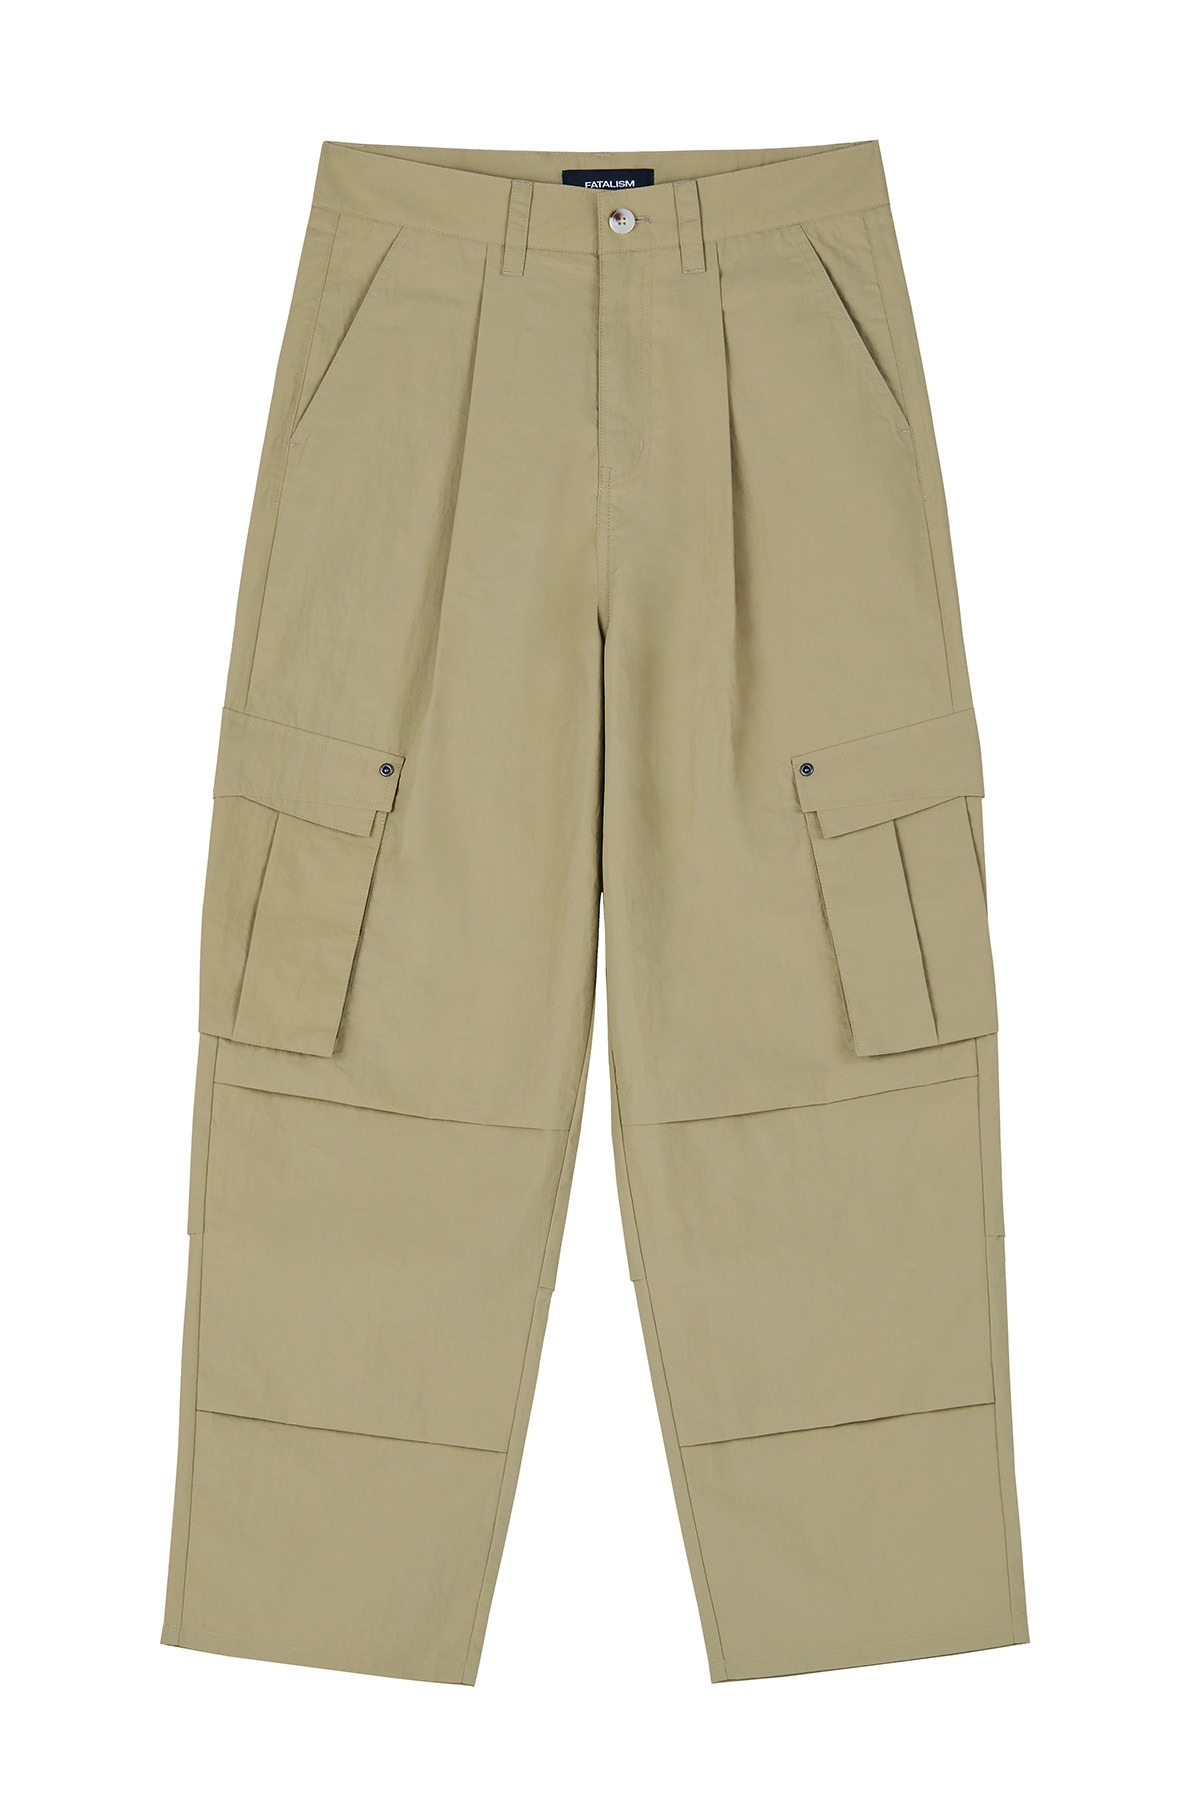 #0351 Military cargo pants beige